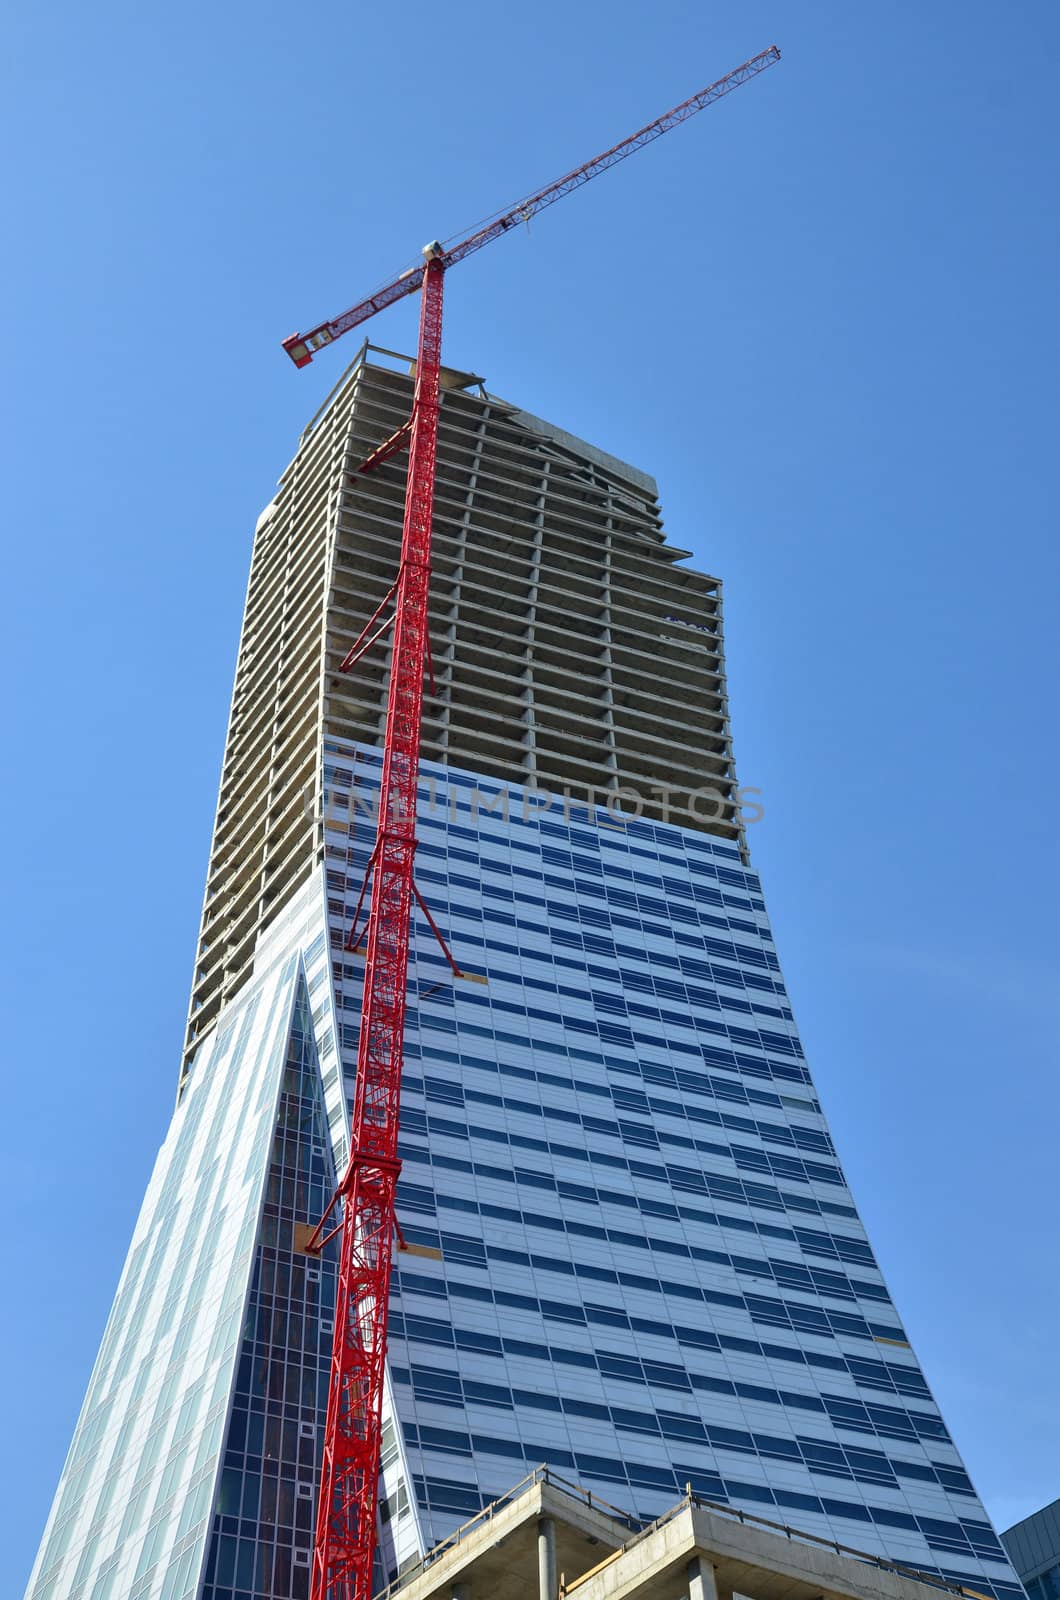 Skyscraper project by Vectorex